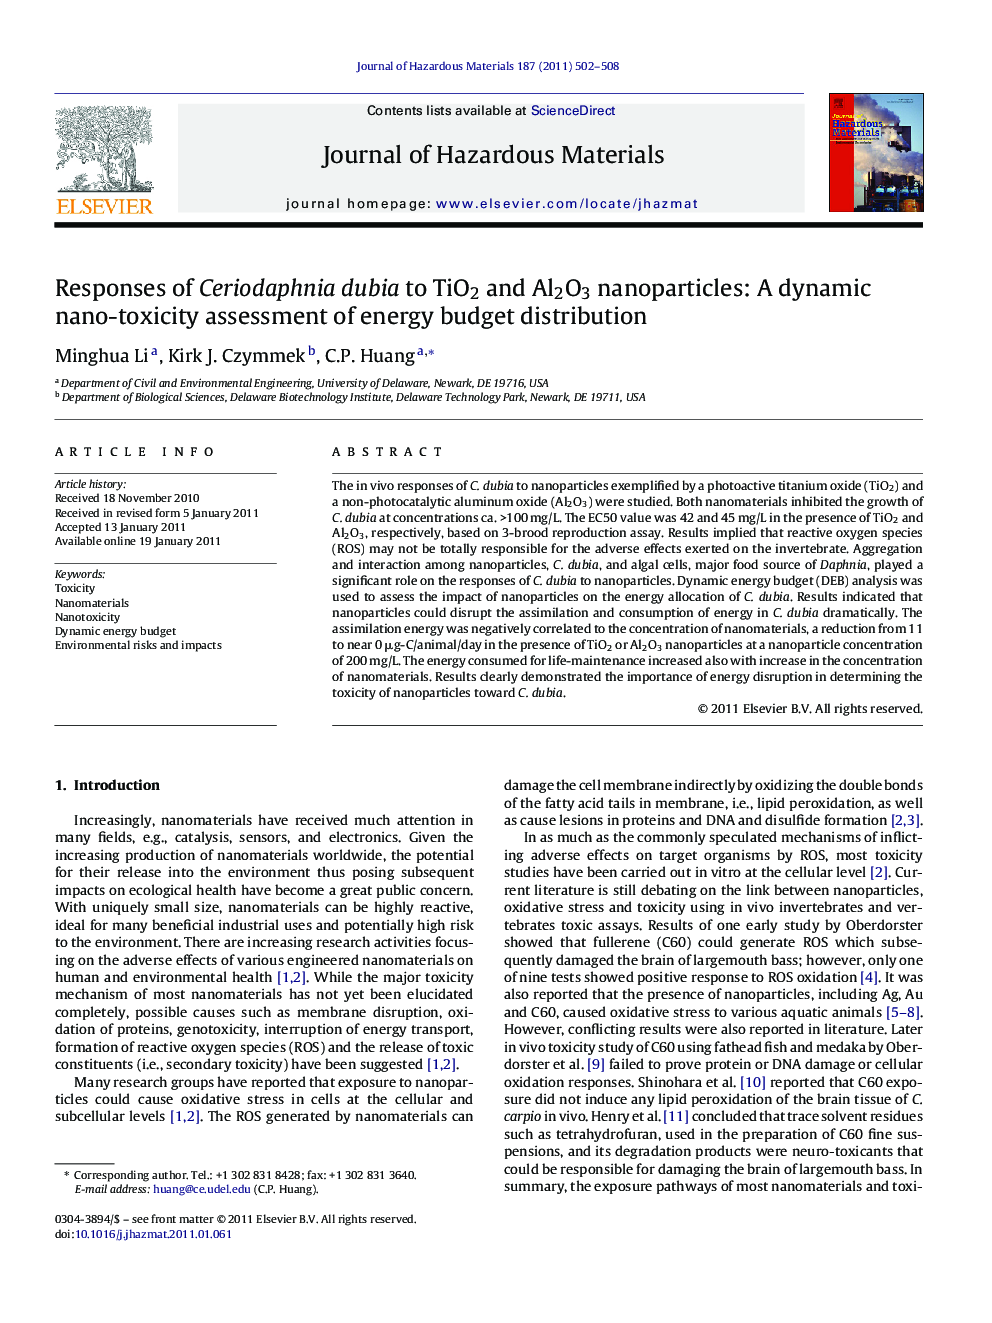 Responses of Ceriodaphnia dubia to TiO2 and Al2O3 nanoparticles: A dynamic nano-toxicity assessment of energy budget distribution